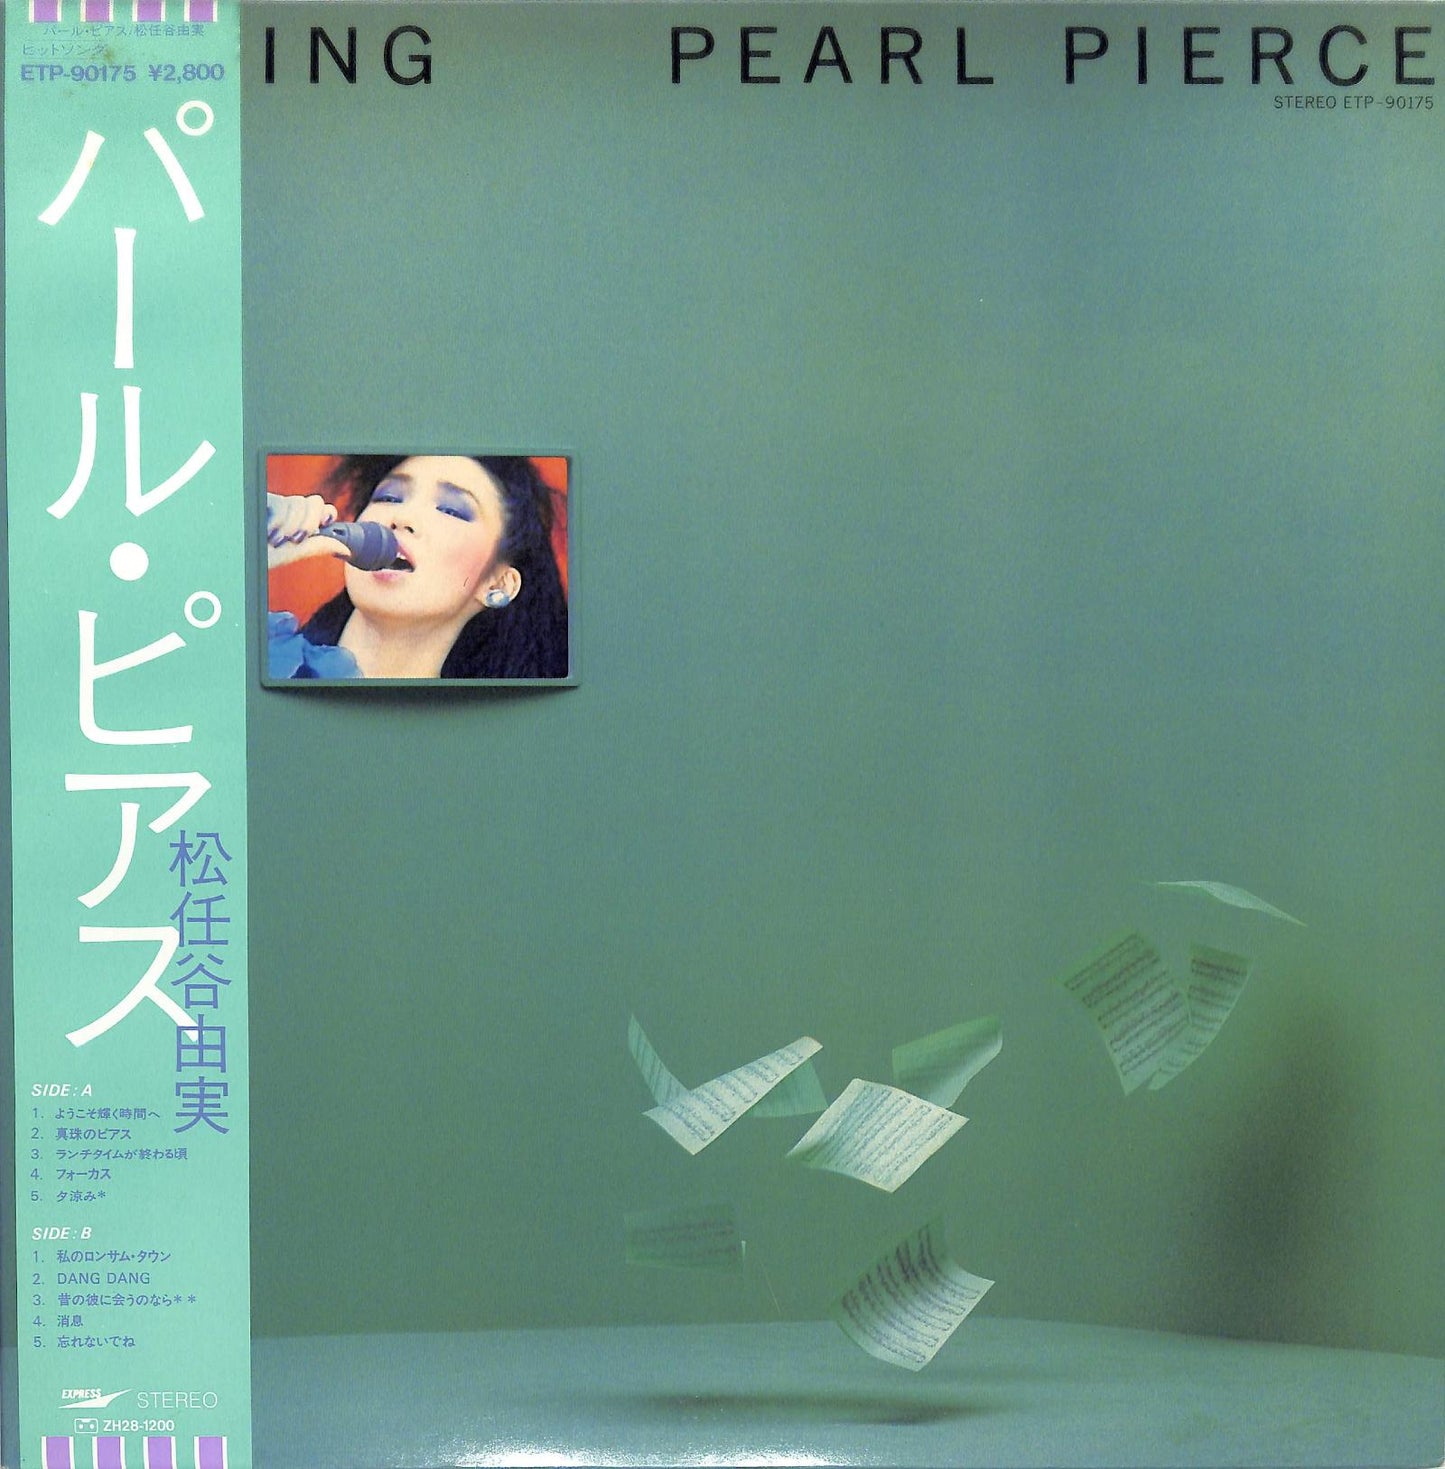 YUMING - Pearl Pierce